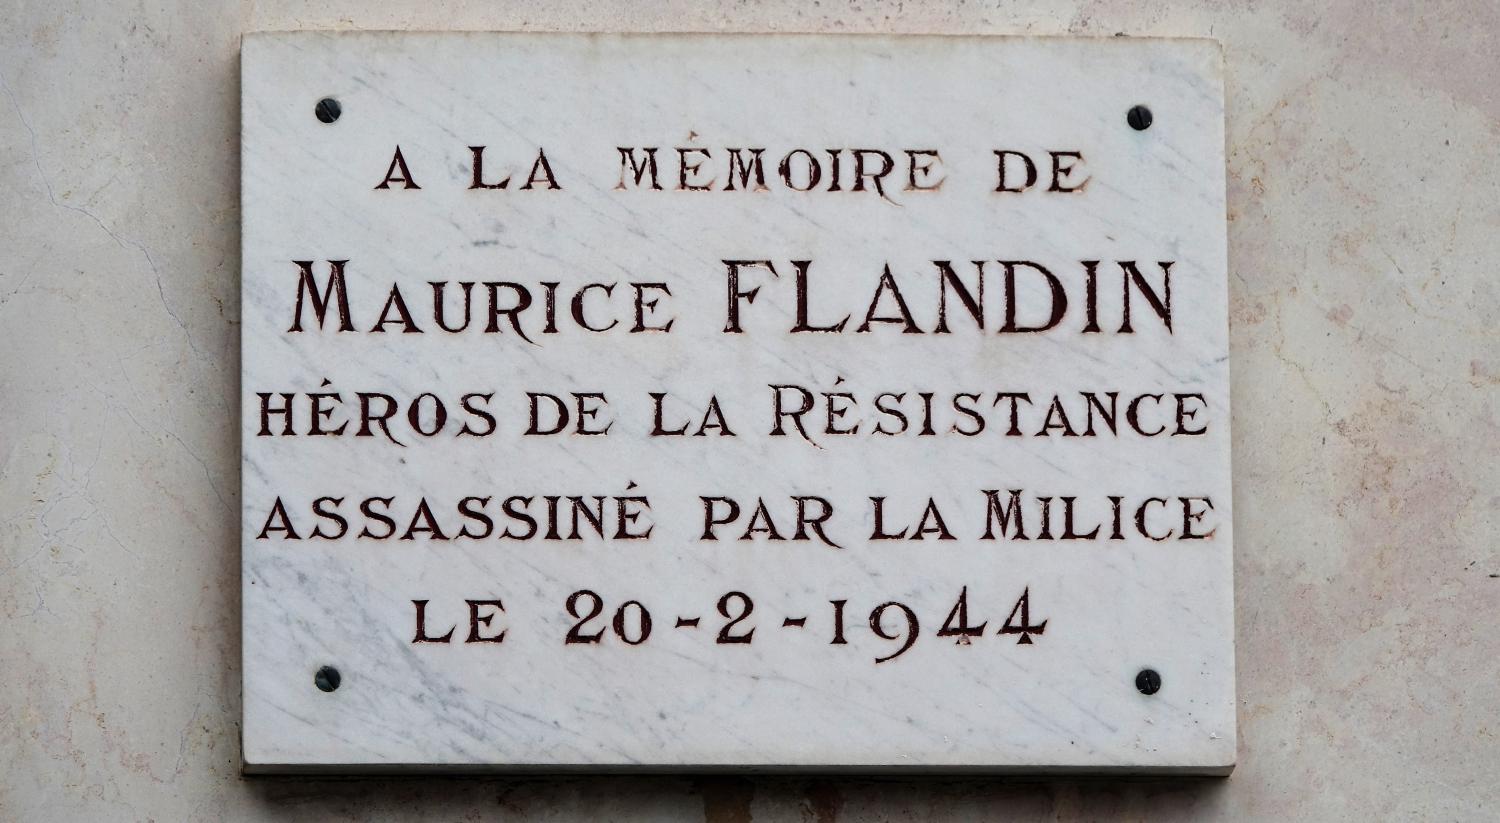 55, rue Maurice-Flandin